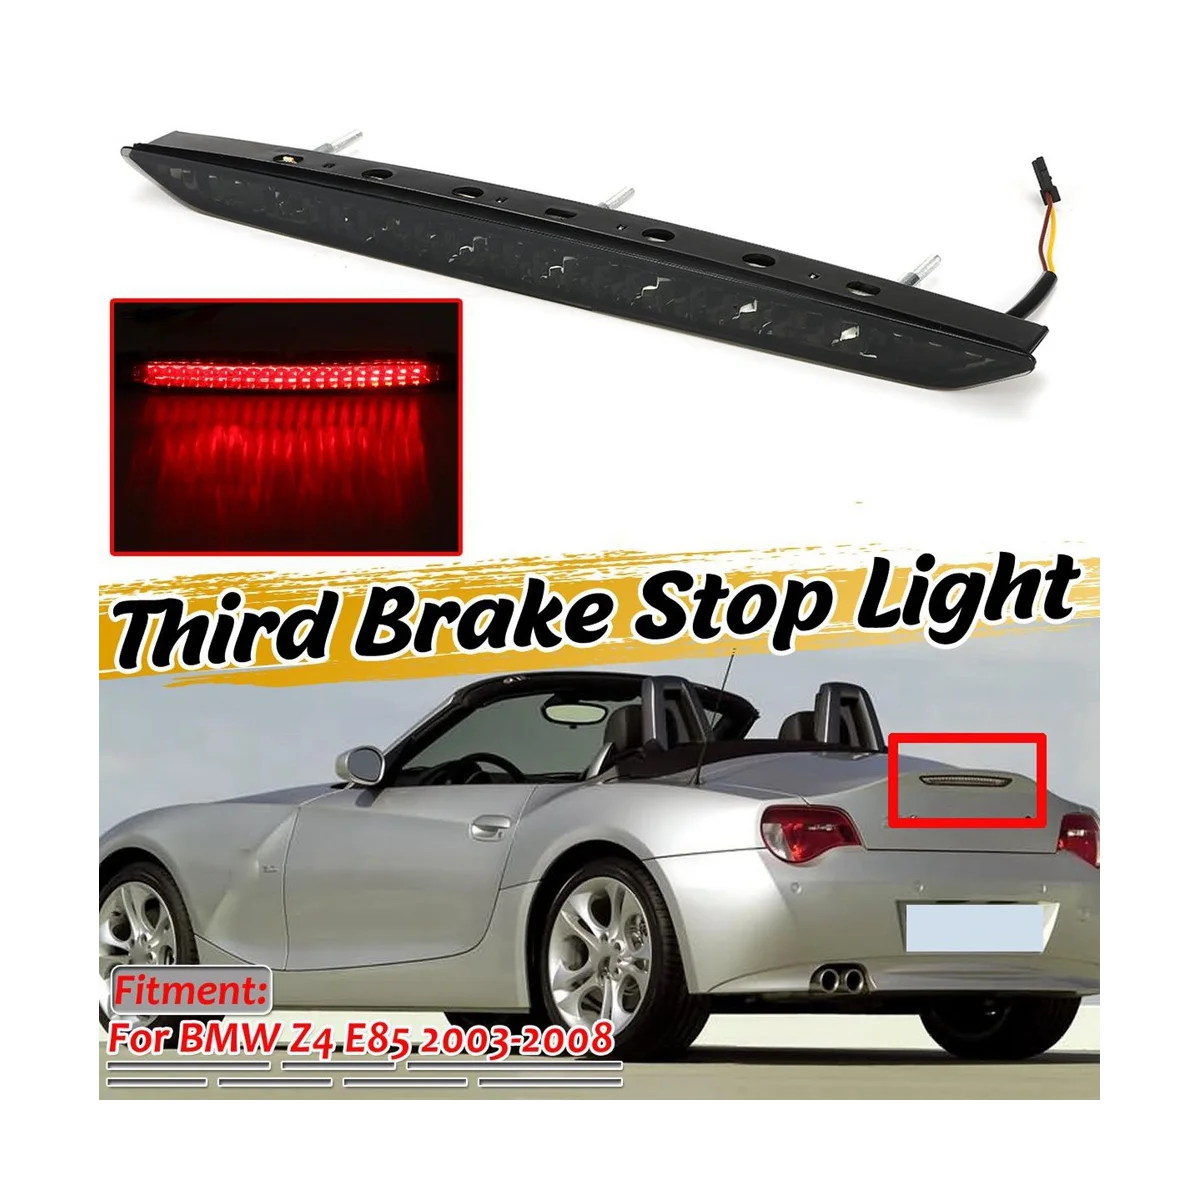 

Car LED Third Tail Rear Stop Signal Lamp Brake Light for BMW Z4 E85 2003 2004-2008 63256930246 Car Indicator Black